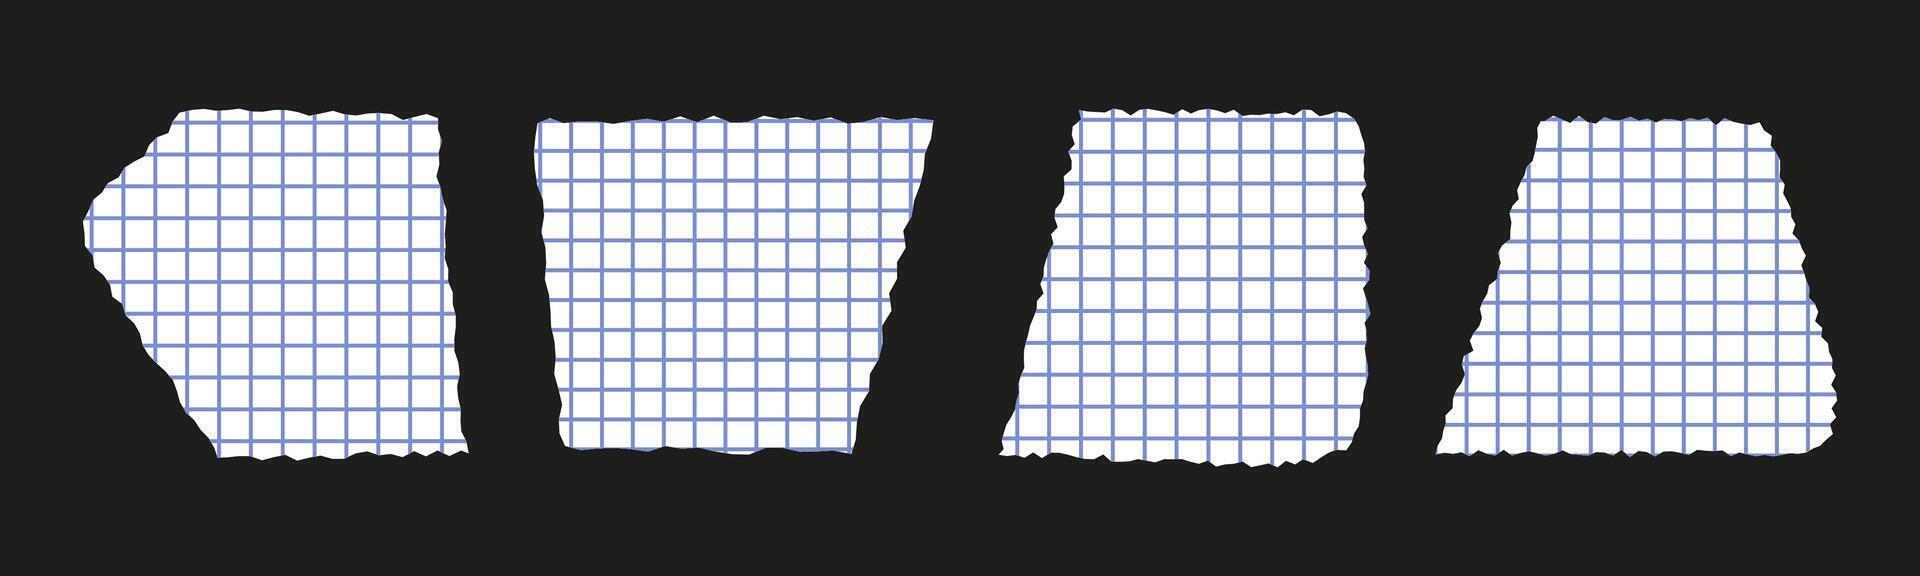 colección de Rasgado papel piezas. negro cuadrado marcos con irregular bordes.conjunto de siluetas de rasgado rectangular formas pedazo de grunge collage pegatinas vector